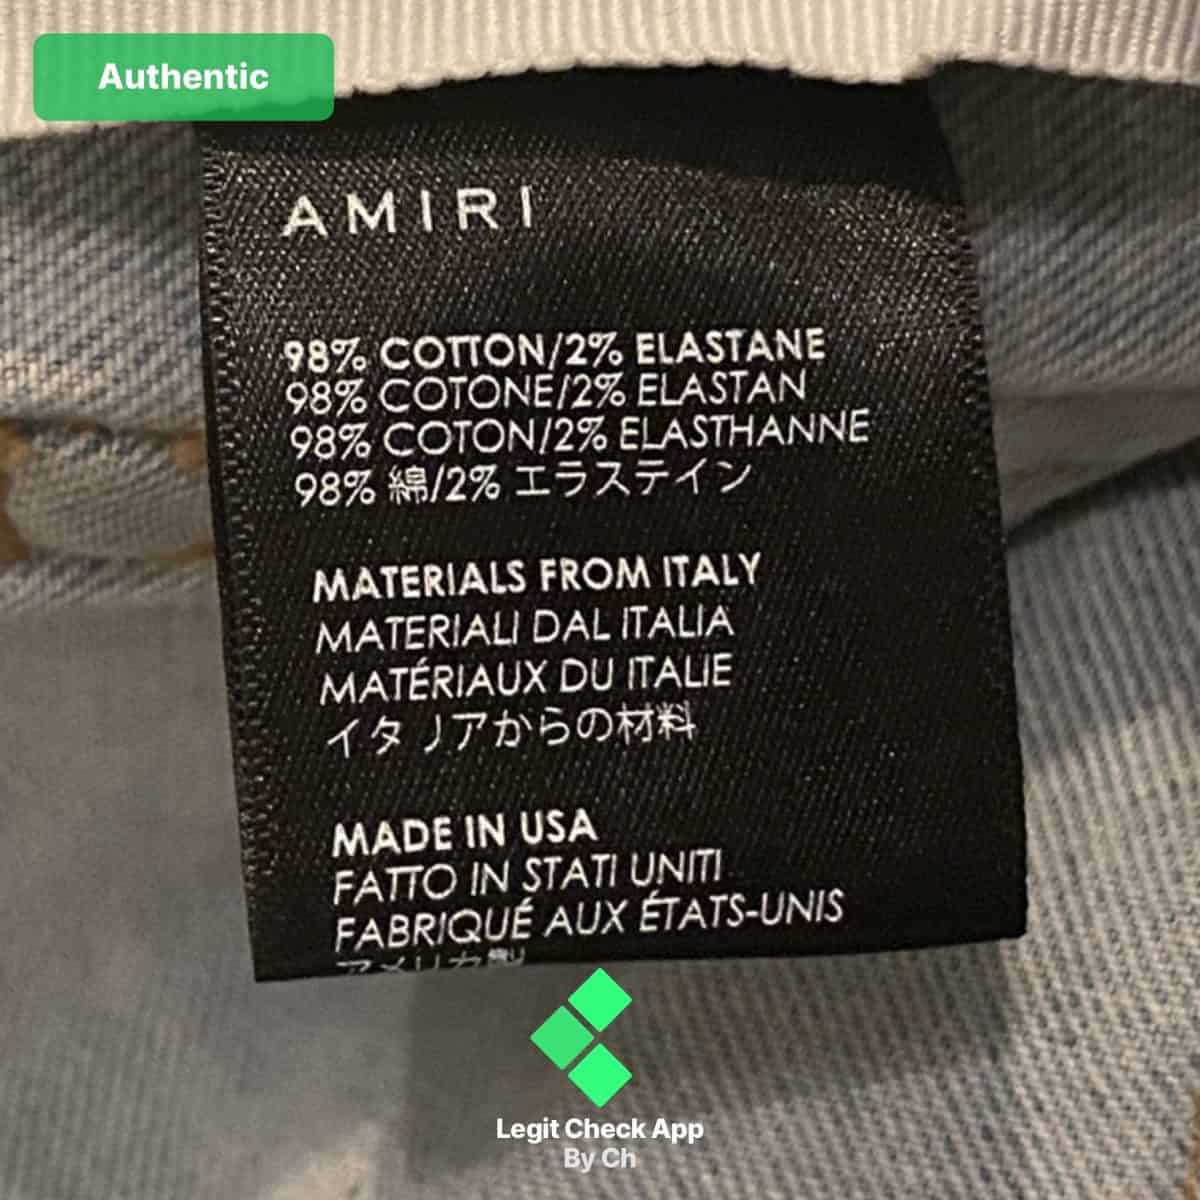 amiri jeans authentication guide